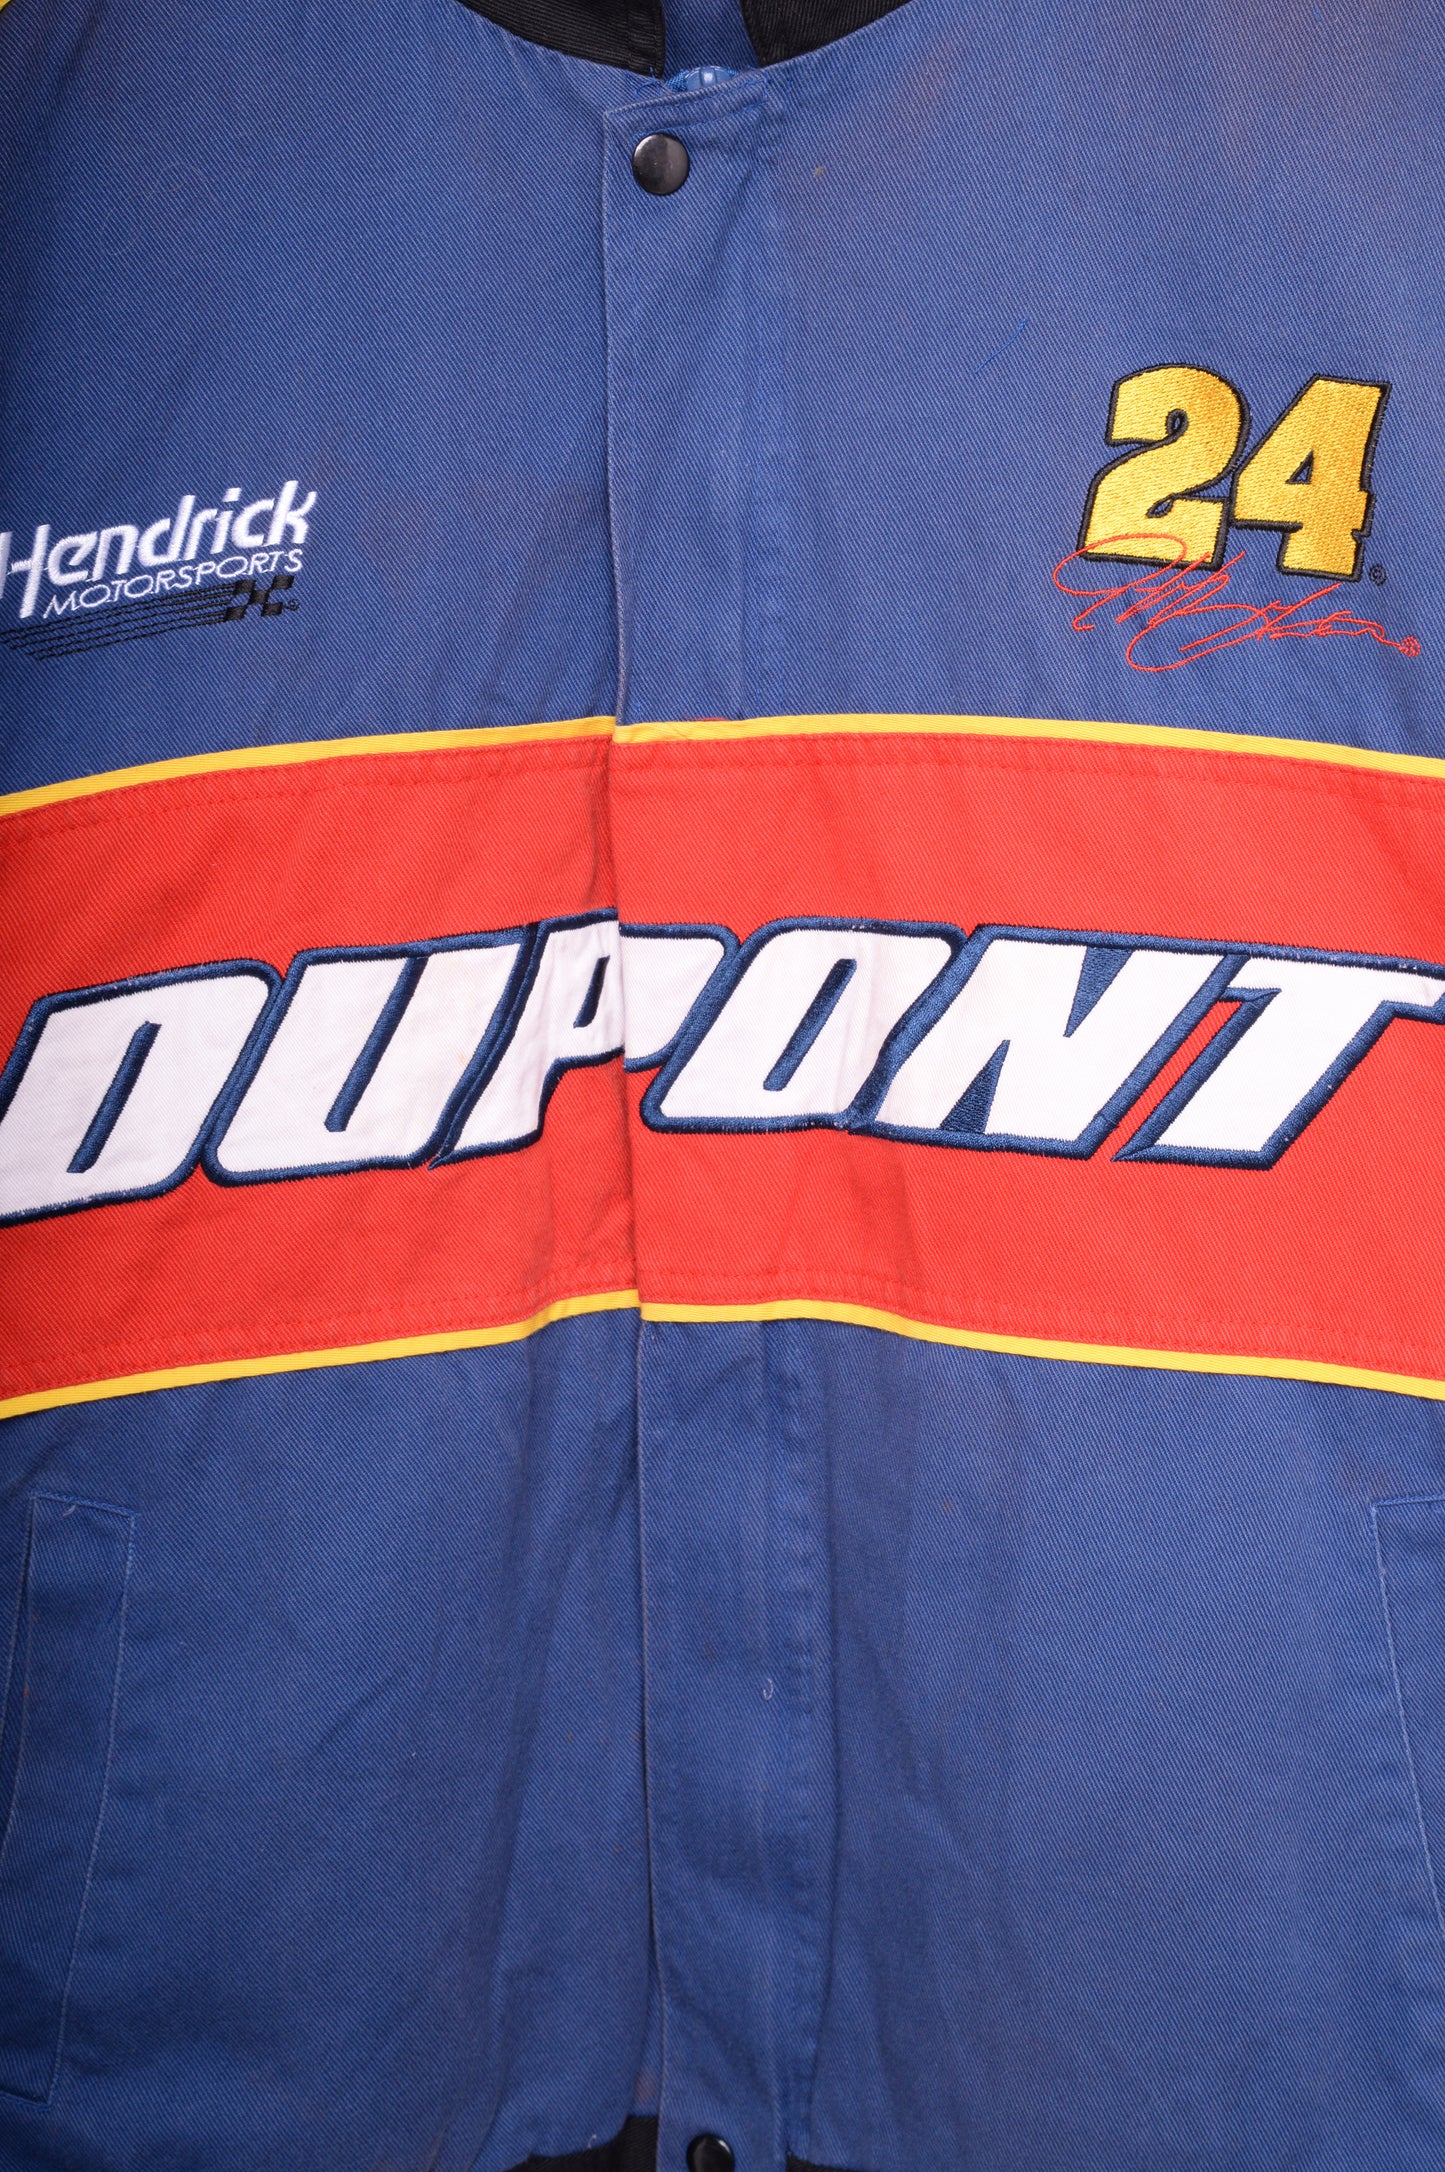 Faded Dupont Racing Jacket